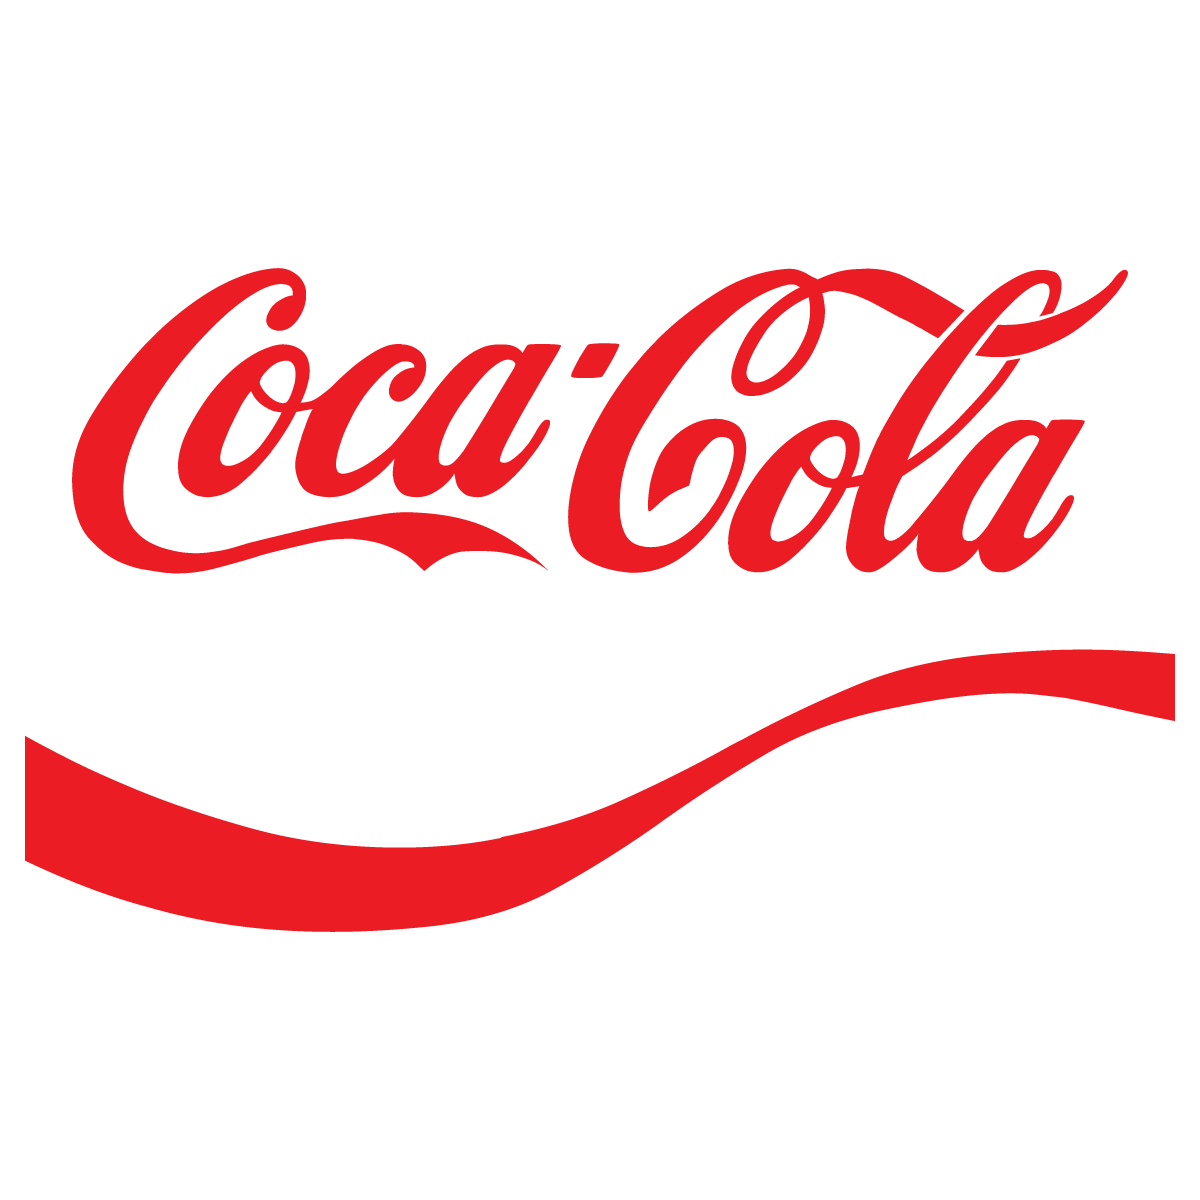 Cocola Logo - Coca Cola Logo Vector Transparent. Free Vector Silhouette Graphics